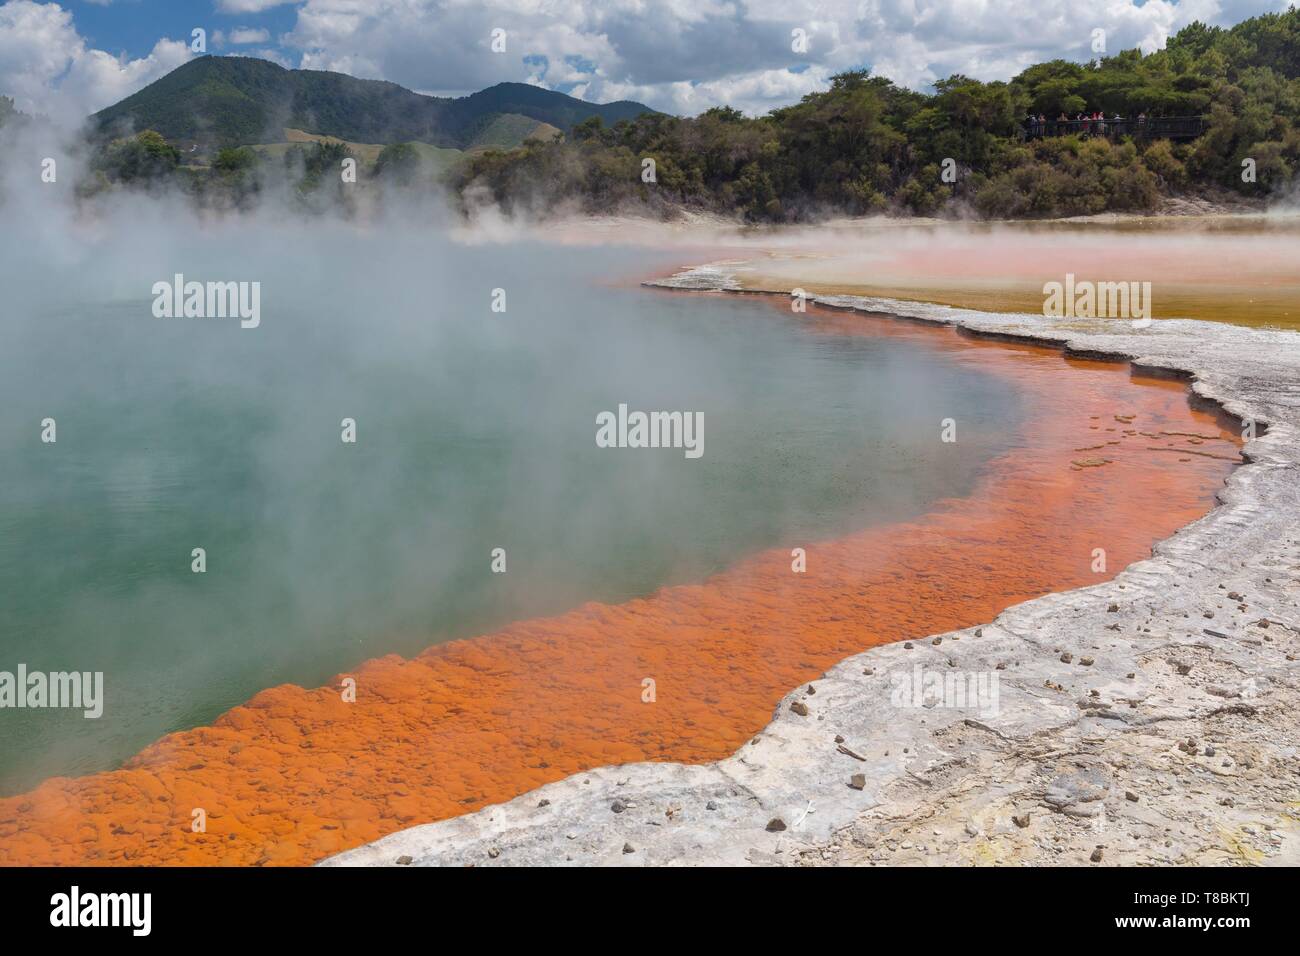 New Zealand, North Island, Waikato region, Taupo Volcanic Zone, Wai-O-Tapu Geothermal Park, Champagne Pool Stock Photo